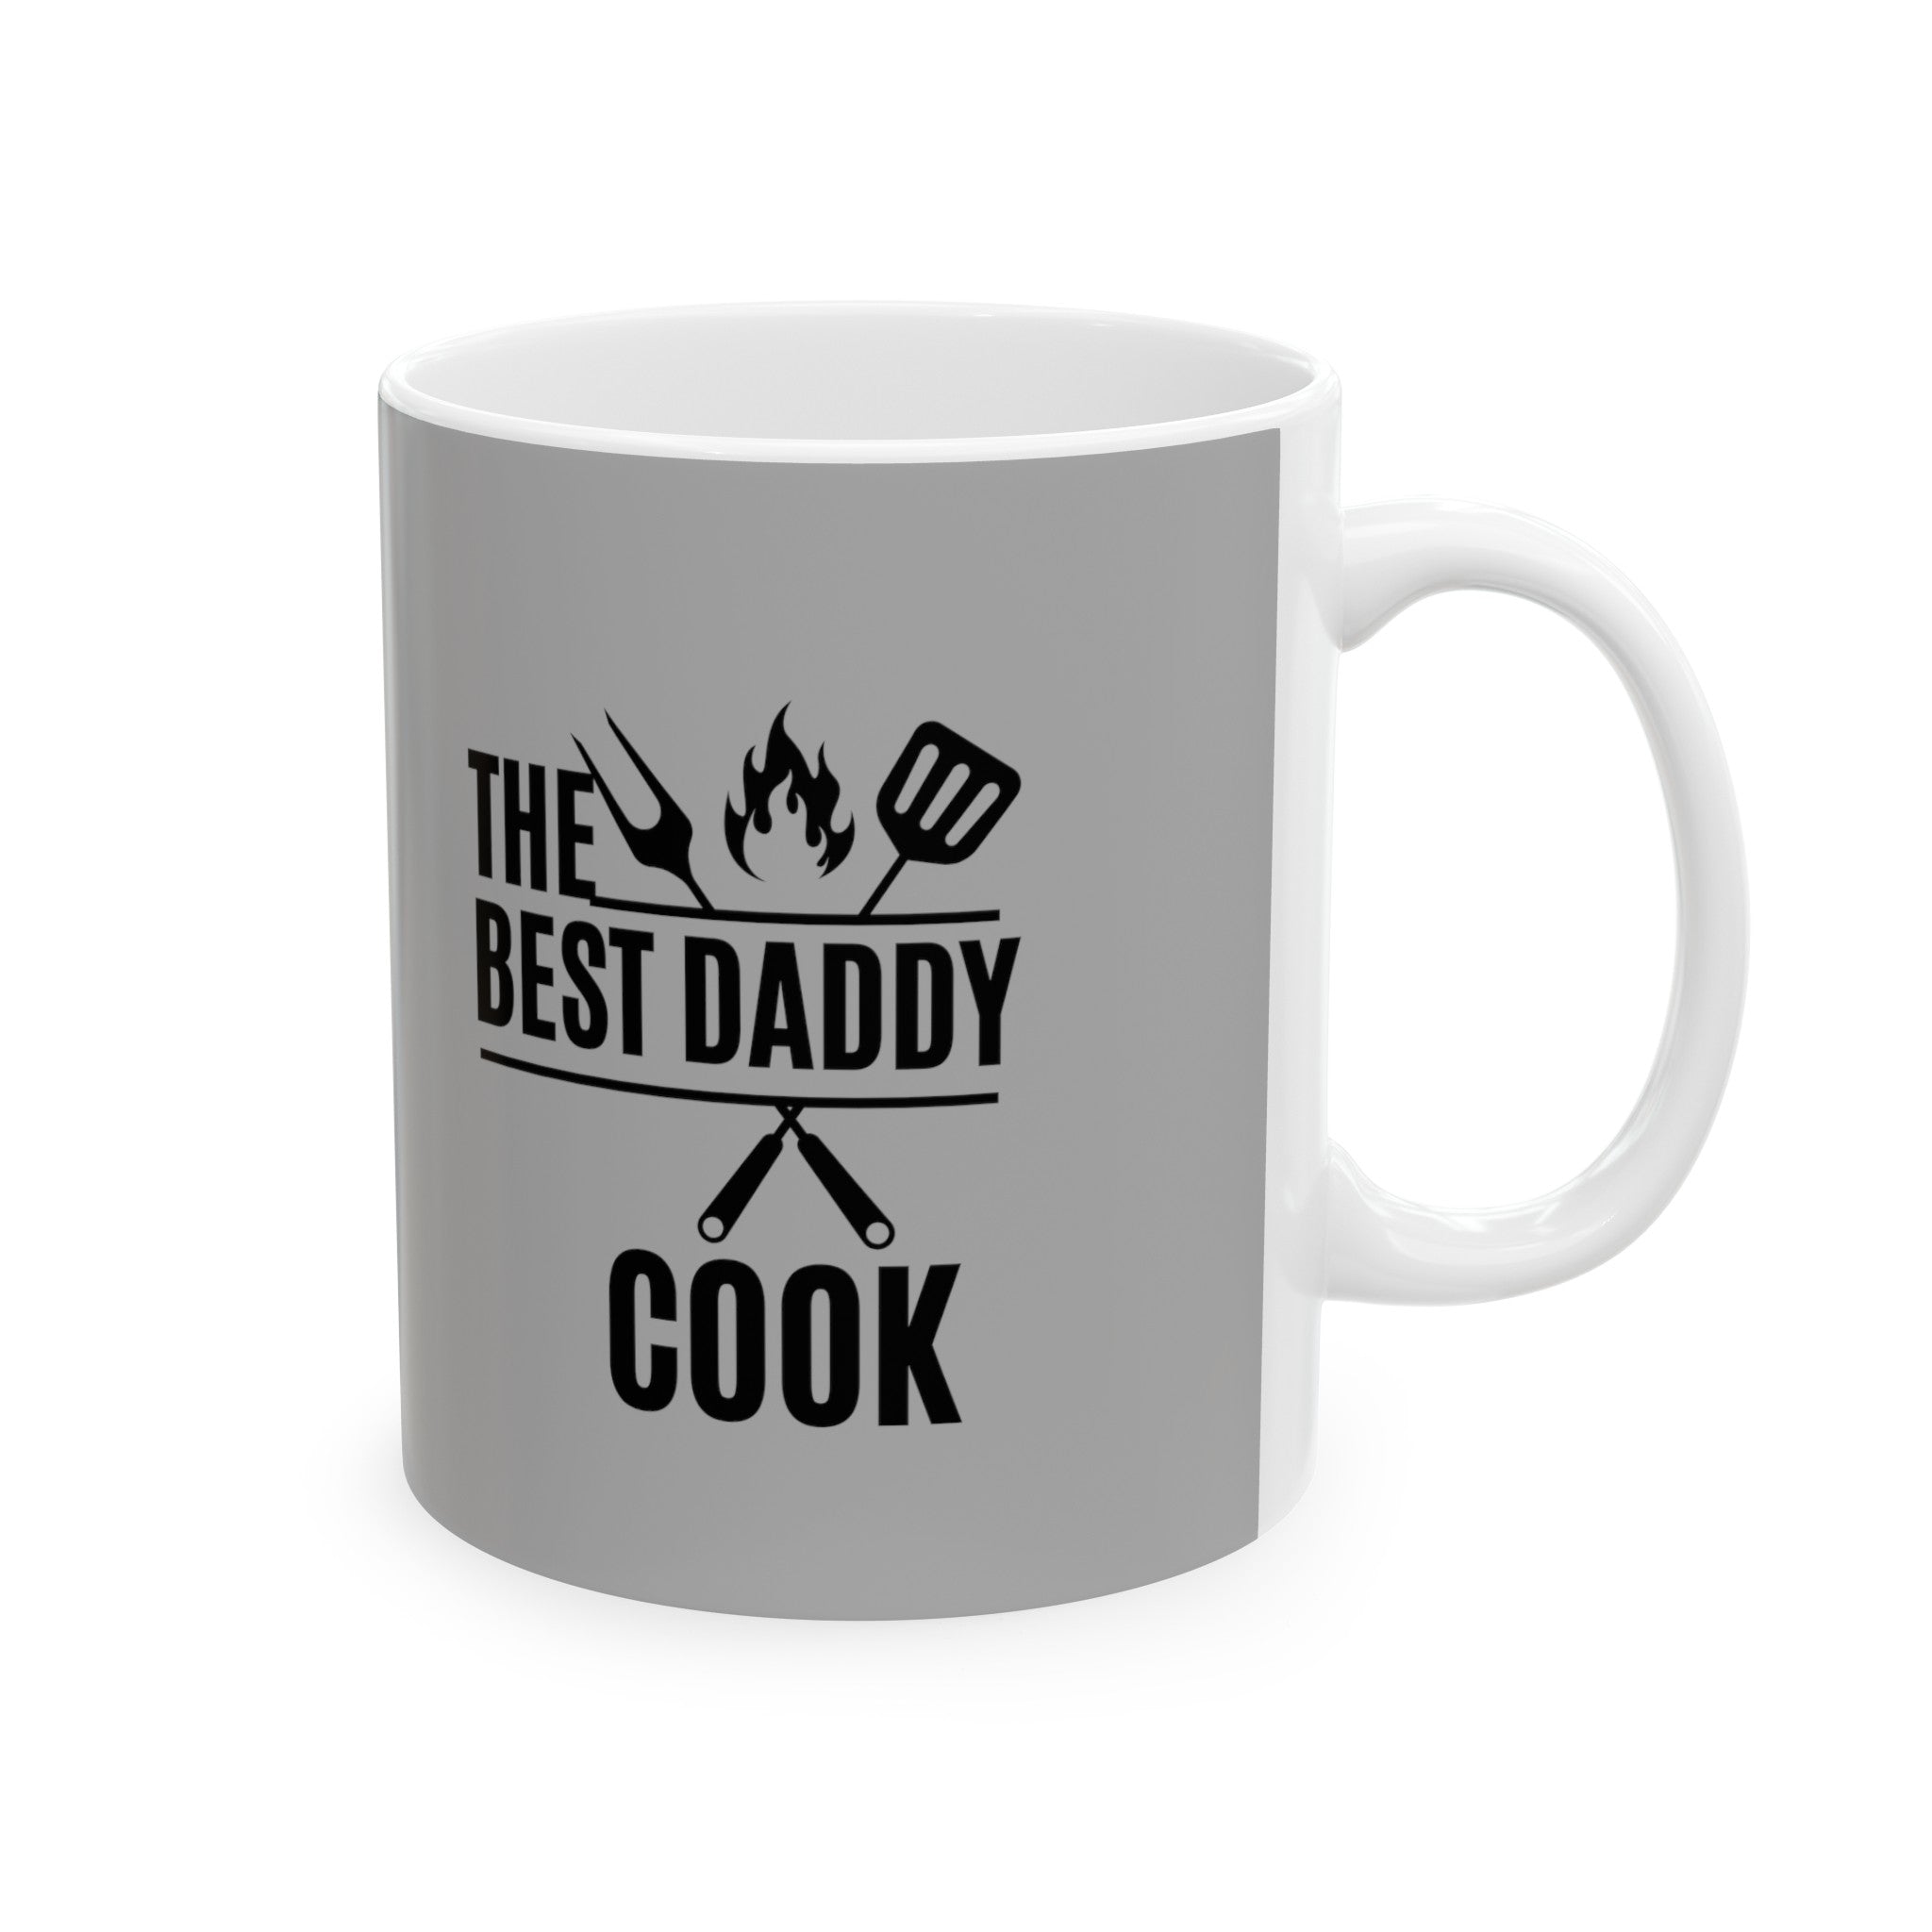 Best Daddy Ceramic Mug 11oz 15oz, Black Sublimation Mugs, Valentine's Day Gift, Kitchen Decor